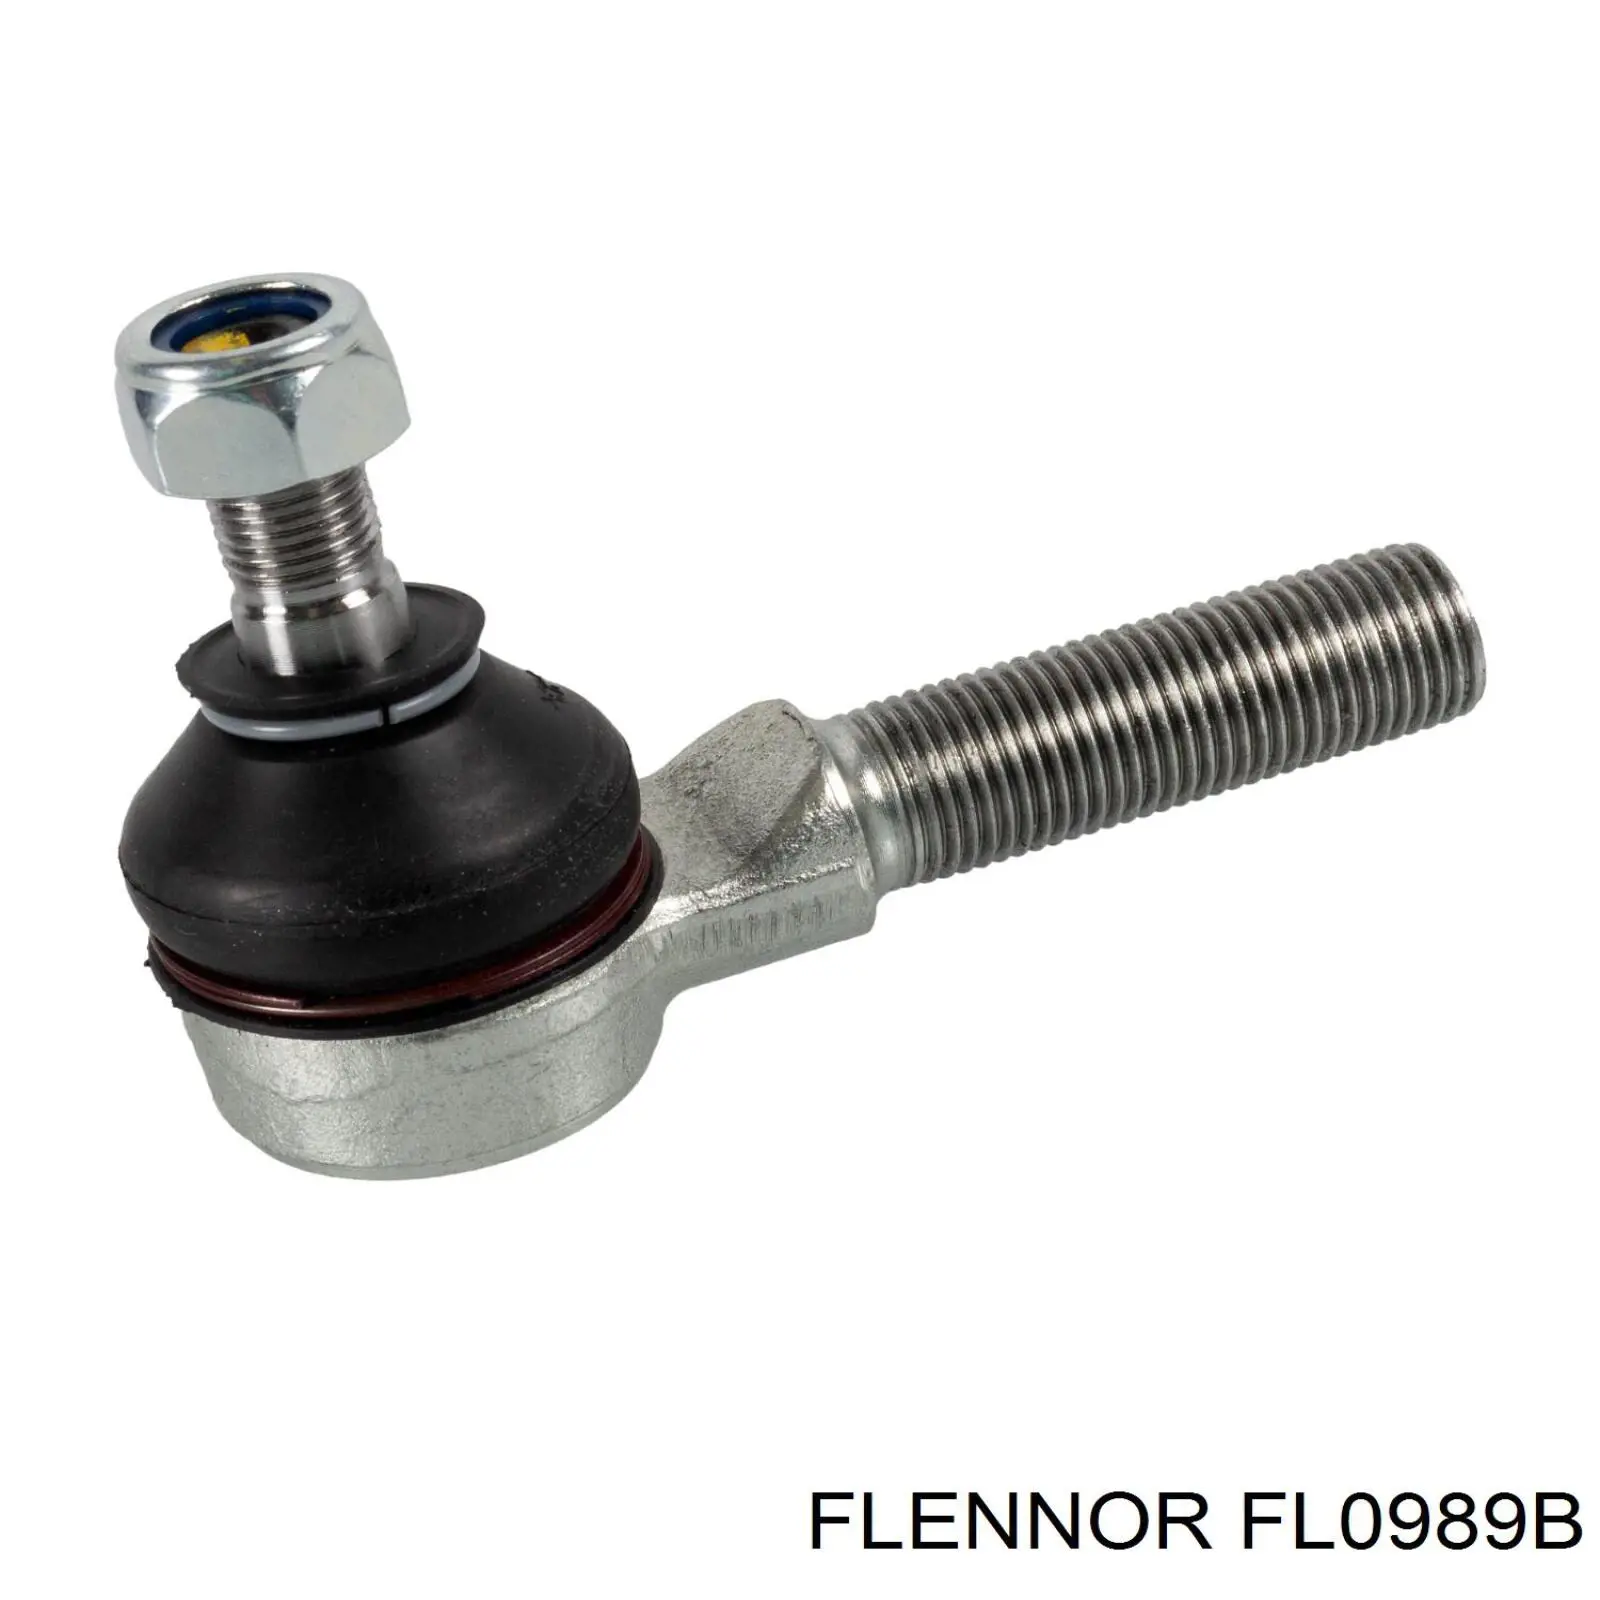 FL0989B Flennor rótula barra de acoplamiento exterior